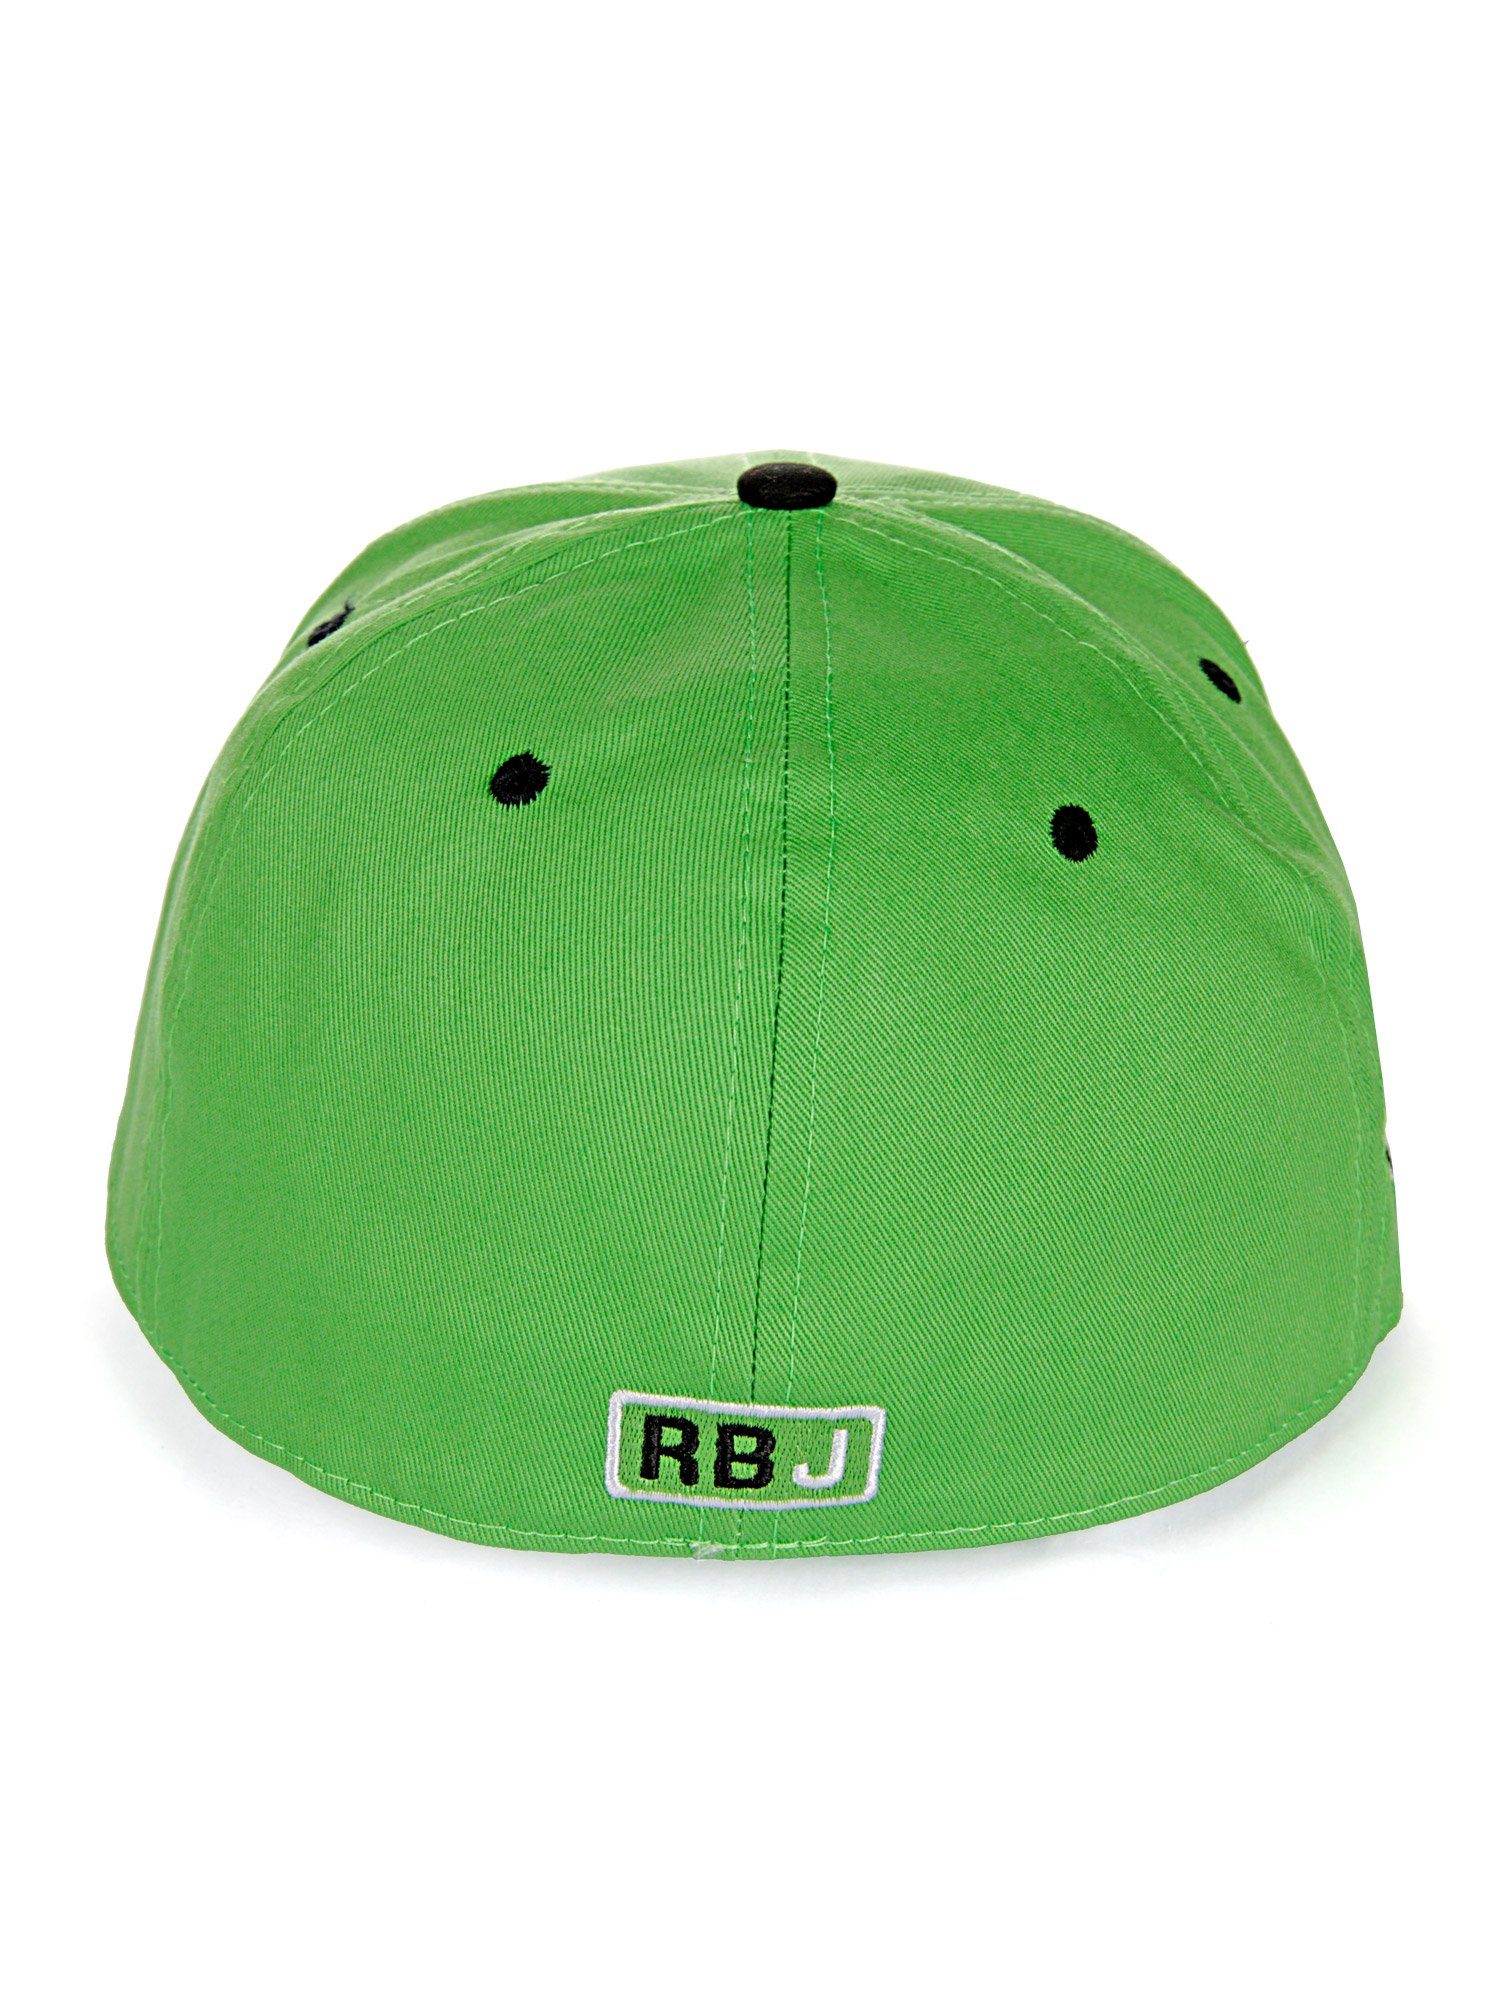 RedBridge Baseball Cap Durham mit grün-schwarz kontrastfarbigem Schirm